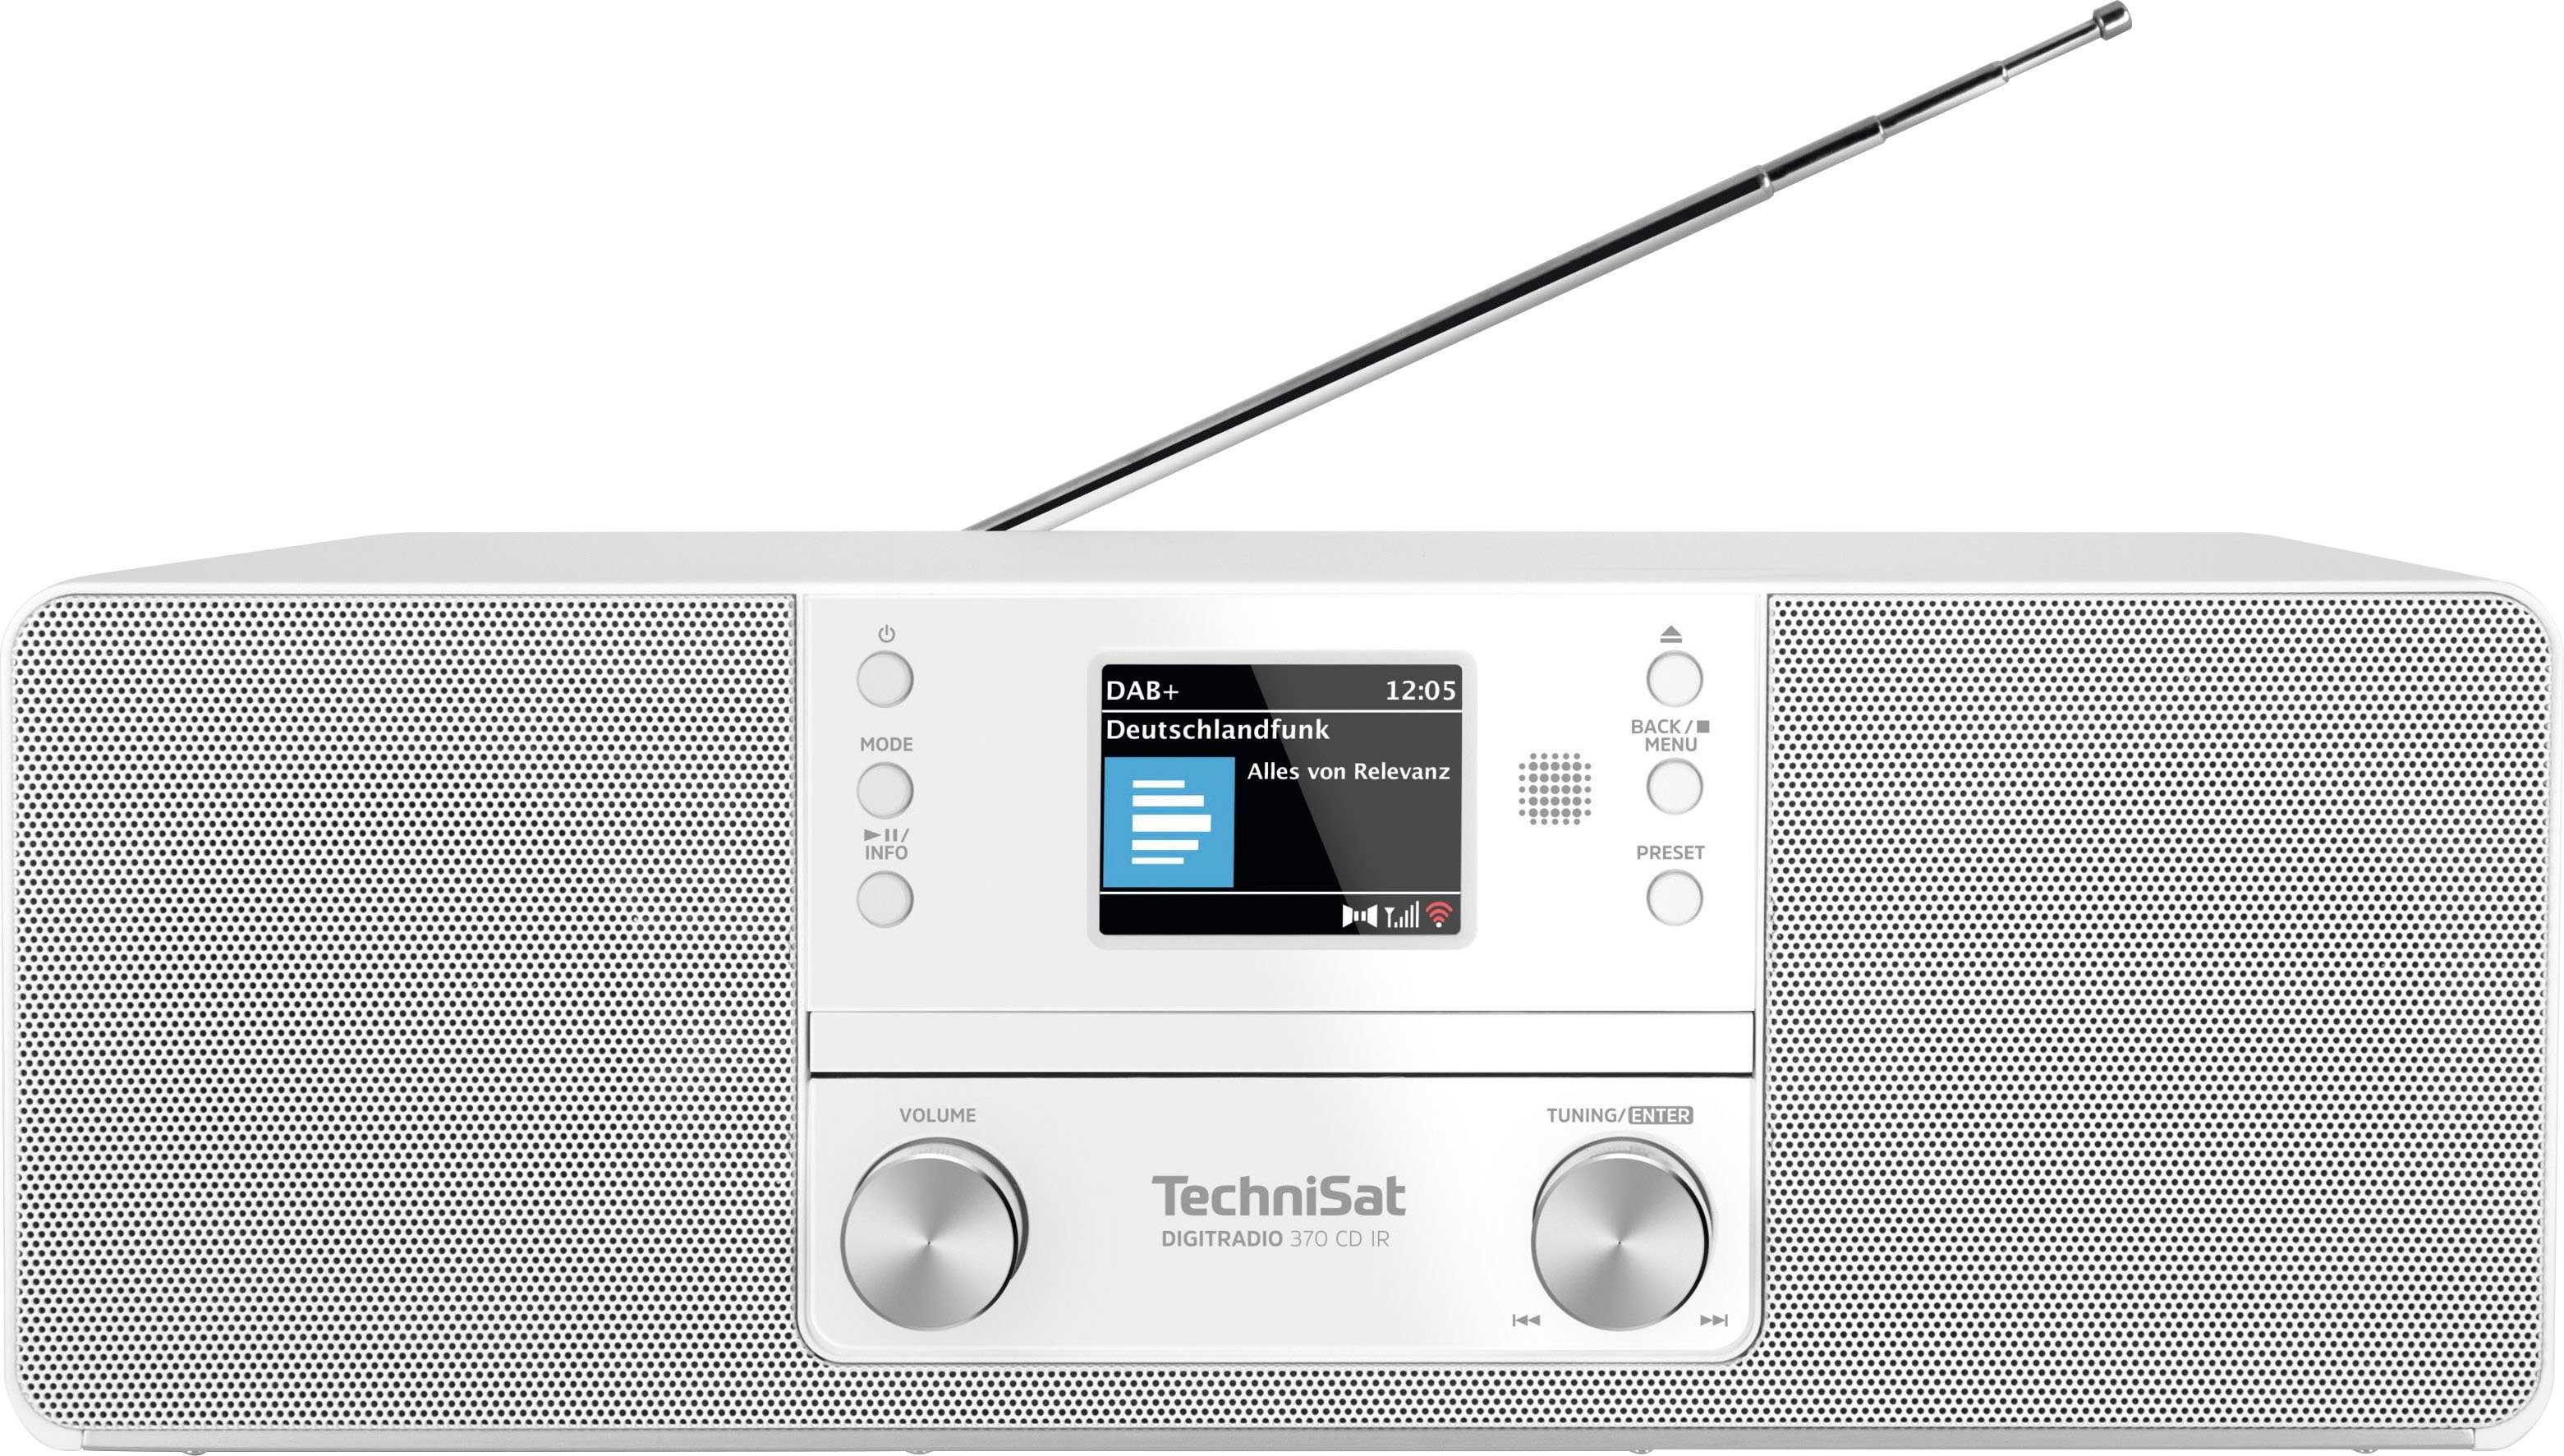 CD 370 DIGITRADIO IR (Digitalradio TechniSat weiß W) RDS, 10 mit (DAB), Digitalradio UKW (DAB)